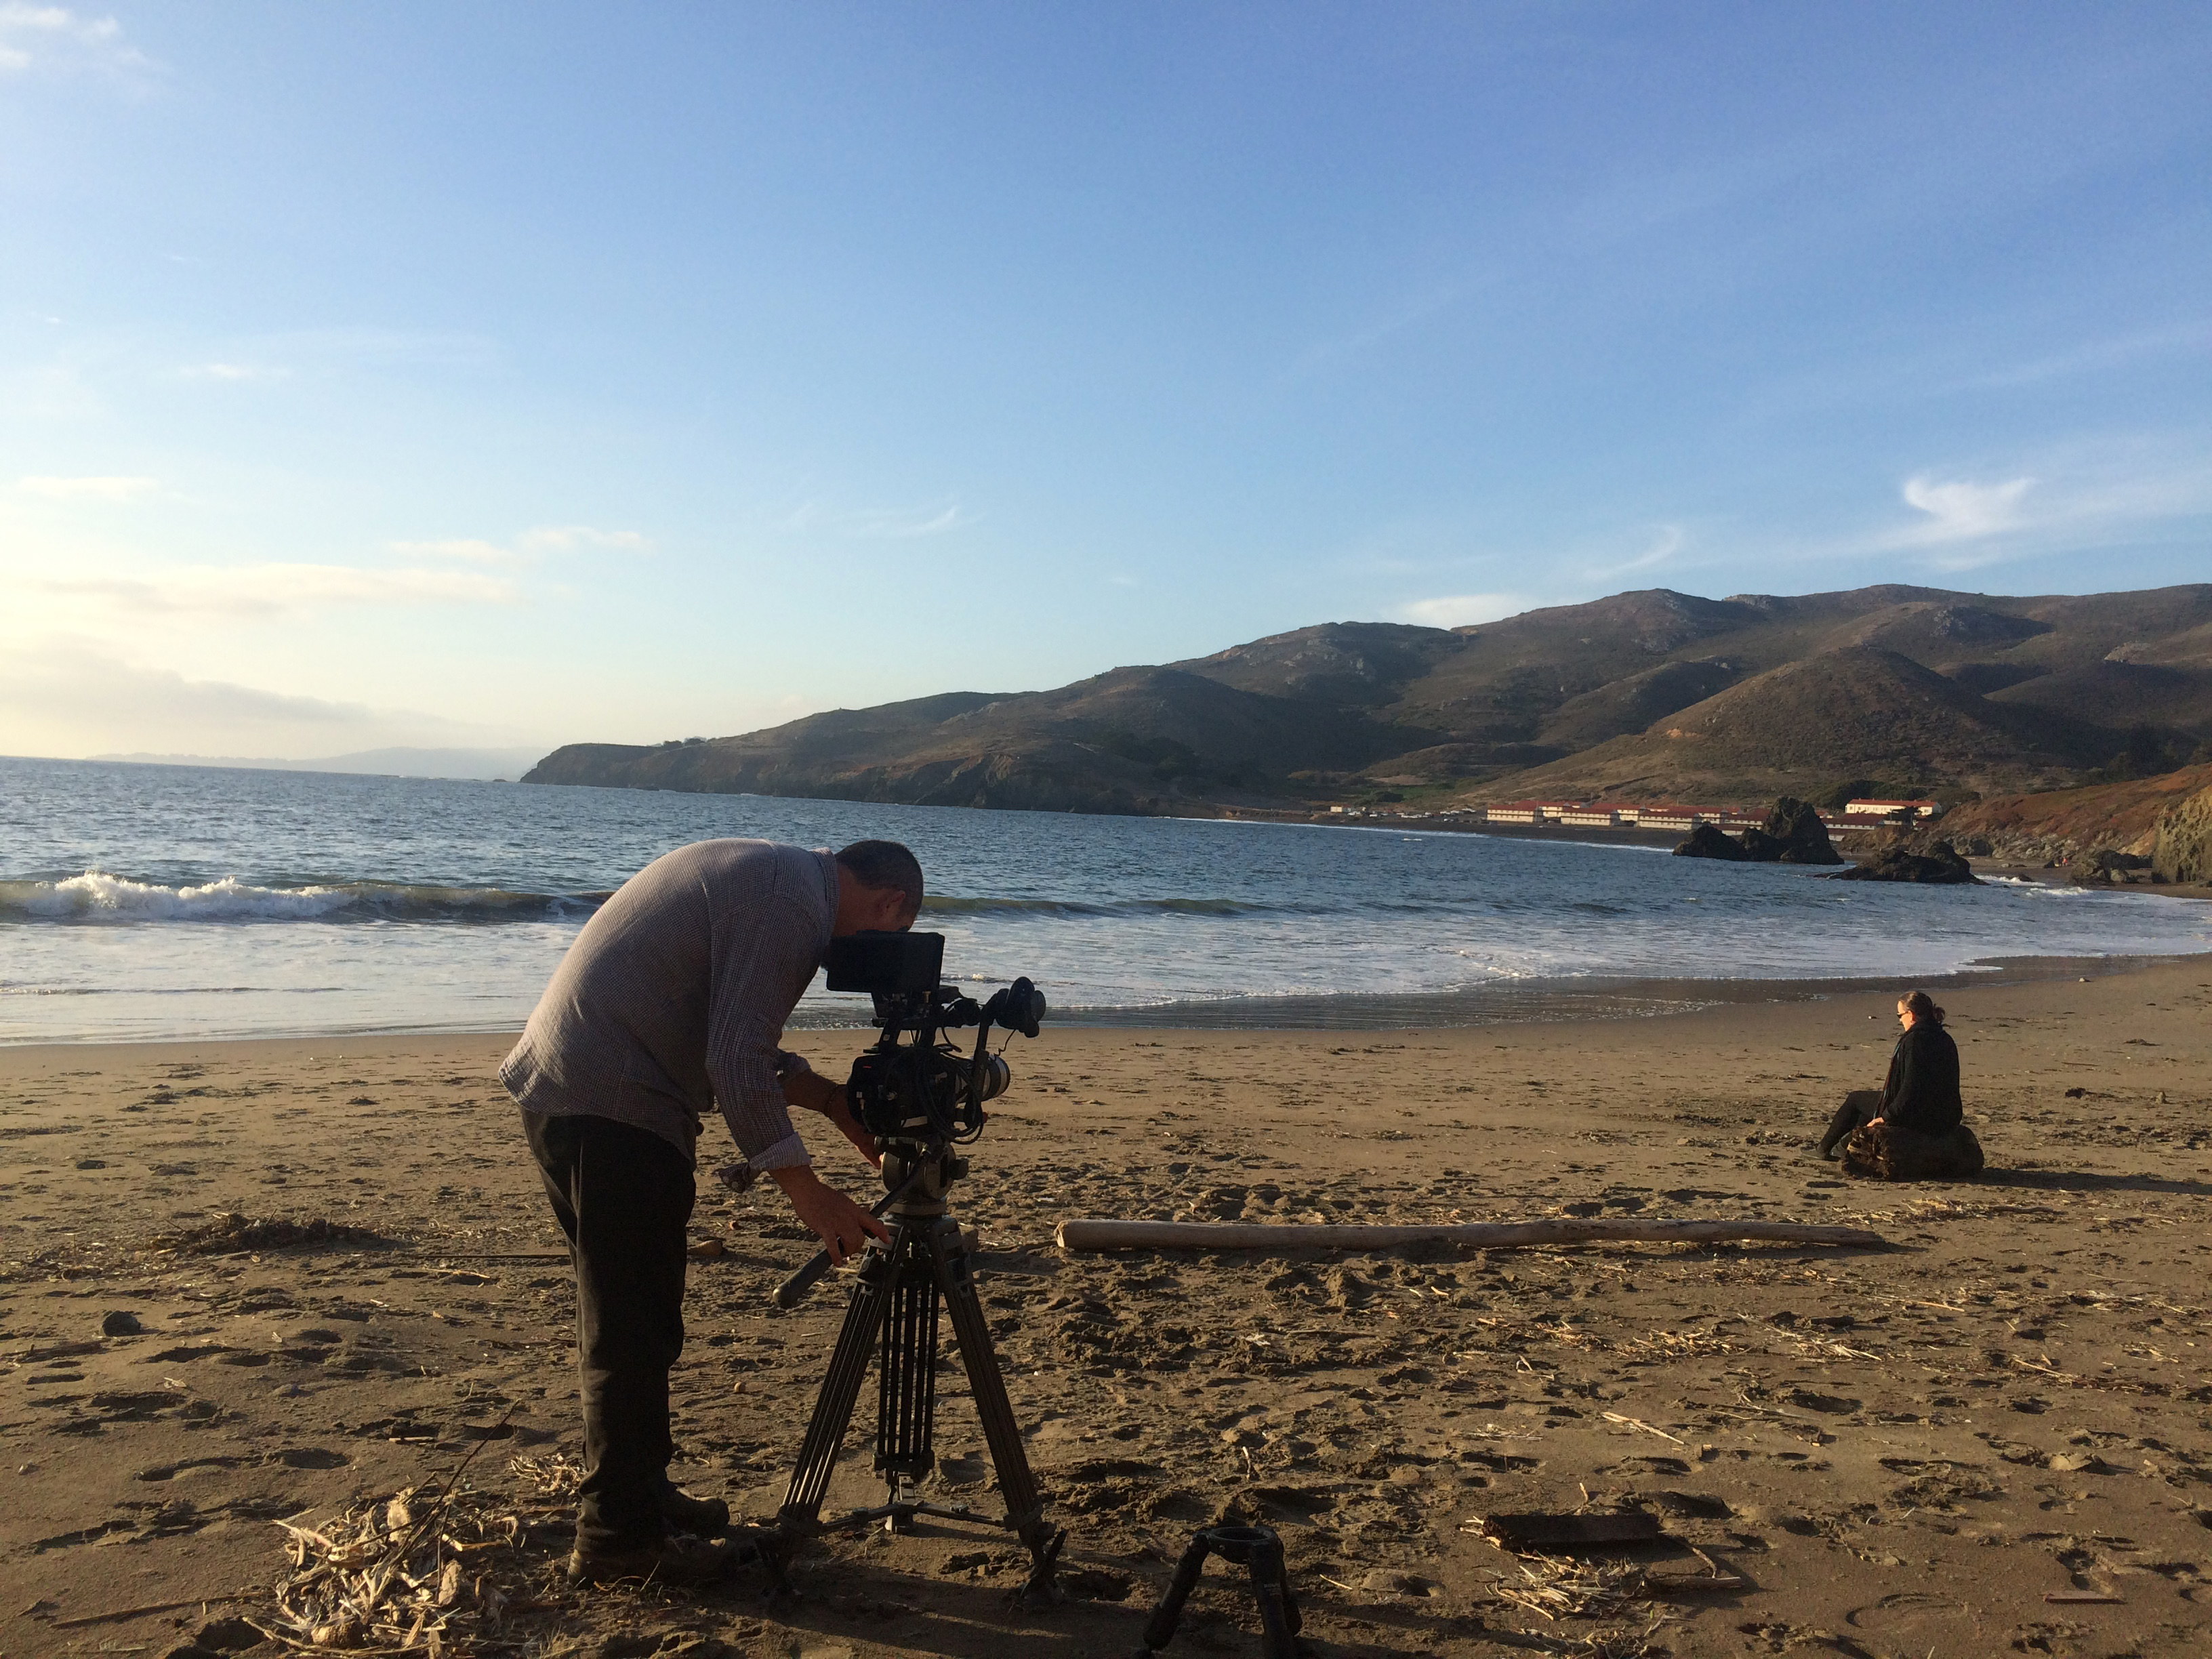 ART21 filming Natalia Almada on the beach at the Marin Headlands, just north of San Francisco, 2015. Behind the scenes of ART21’s series Art in the Twenty-First Century, Season 8, 2016. Photo: Ian Forster. © ART21, Inc. 2016.